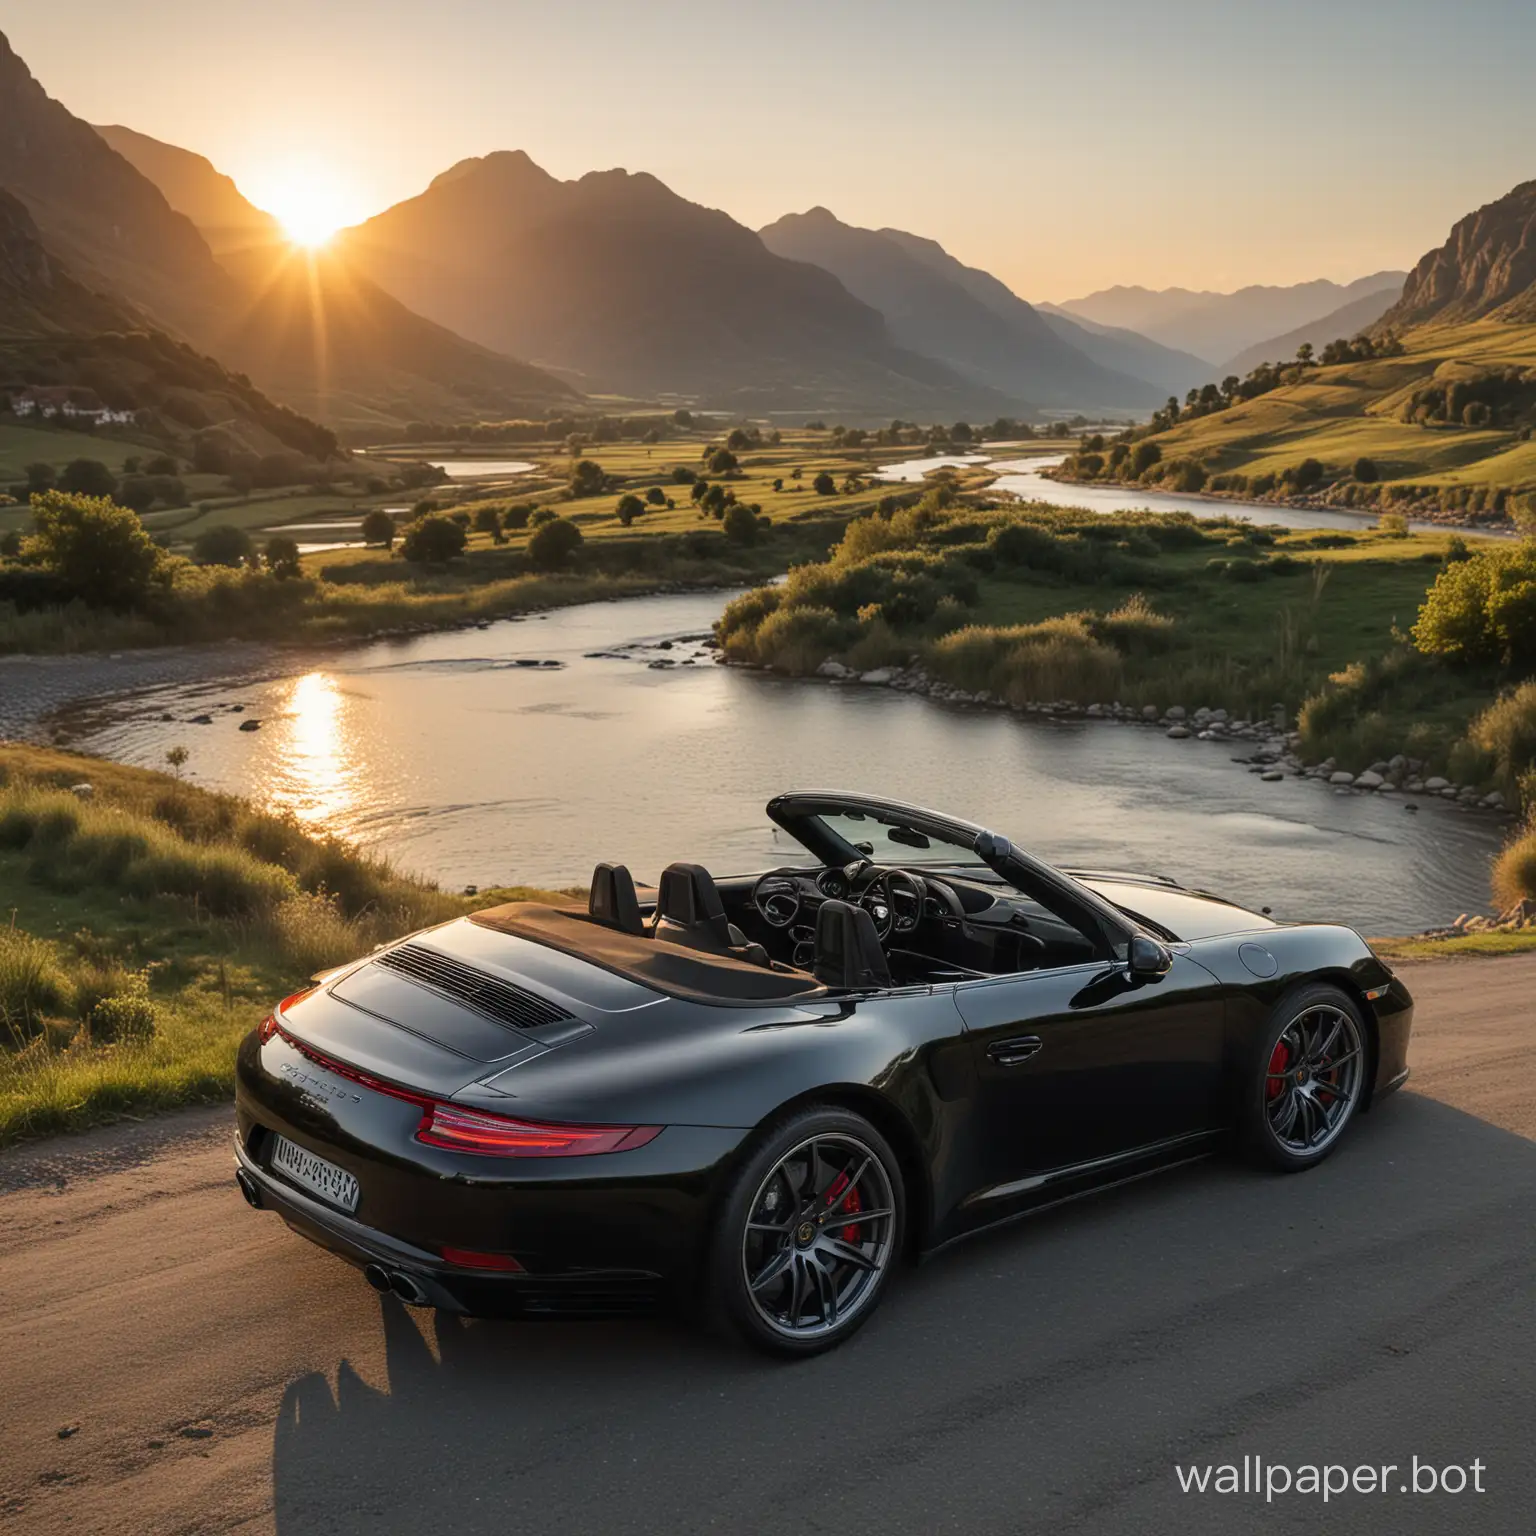 Sunset-View-with-Parked-Black-Porsche-911-Carrera-Cabriolet